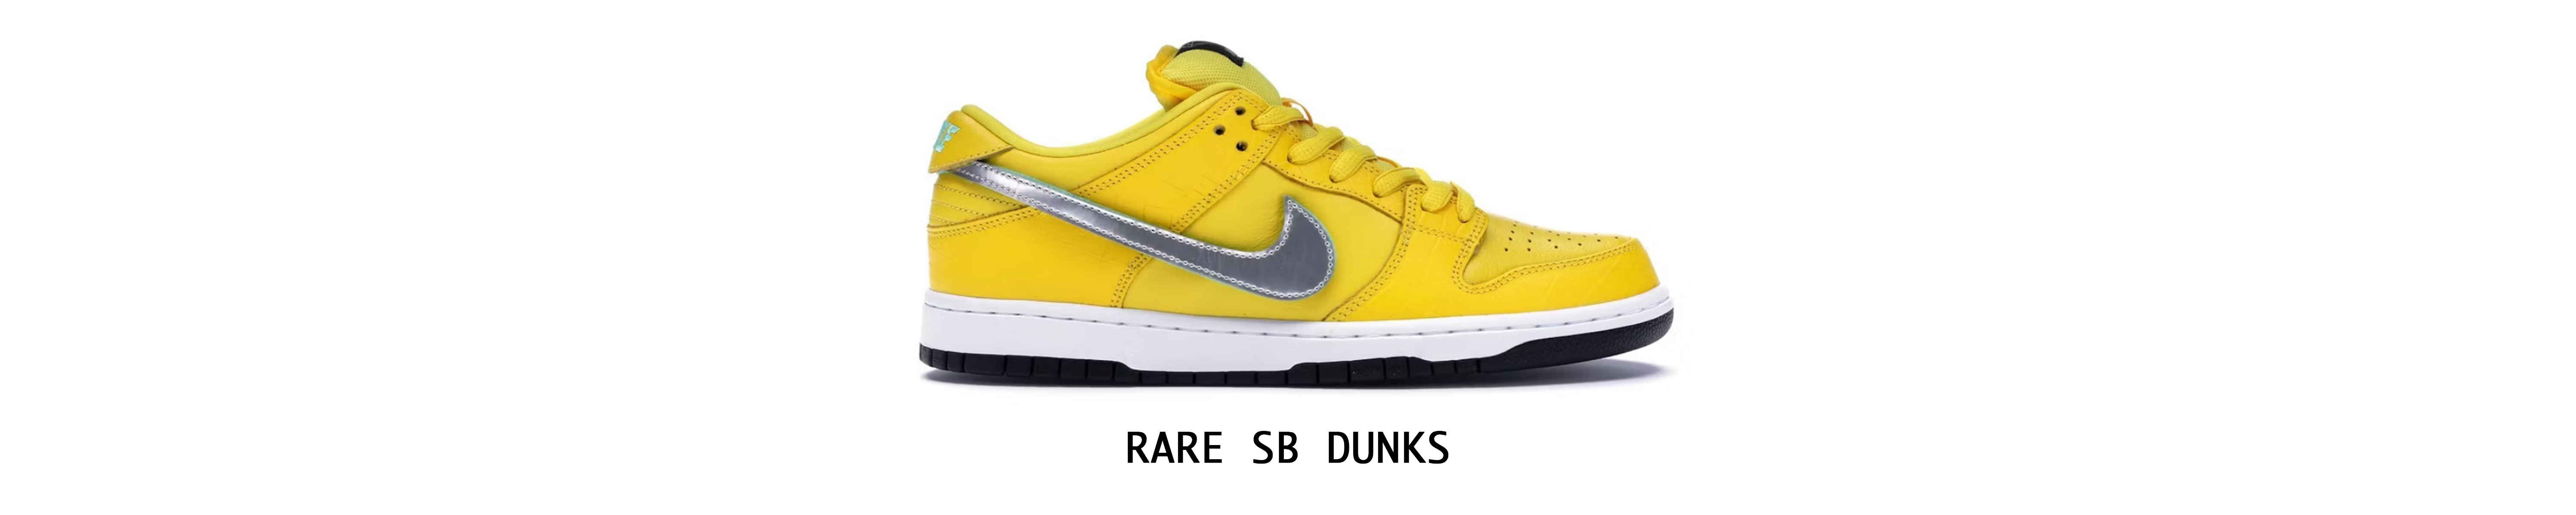 Rare Nike SB Dunks